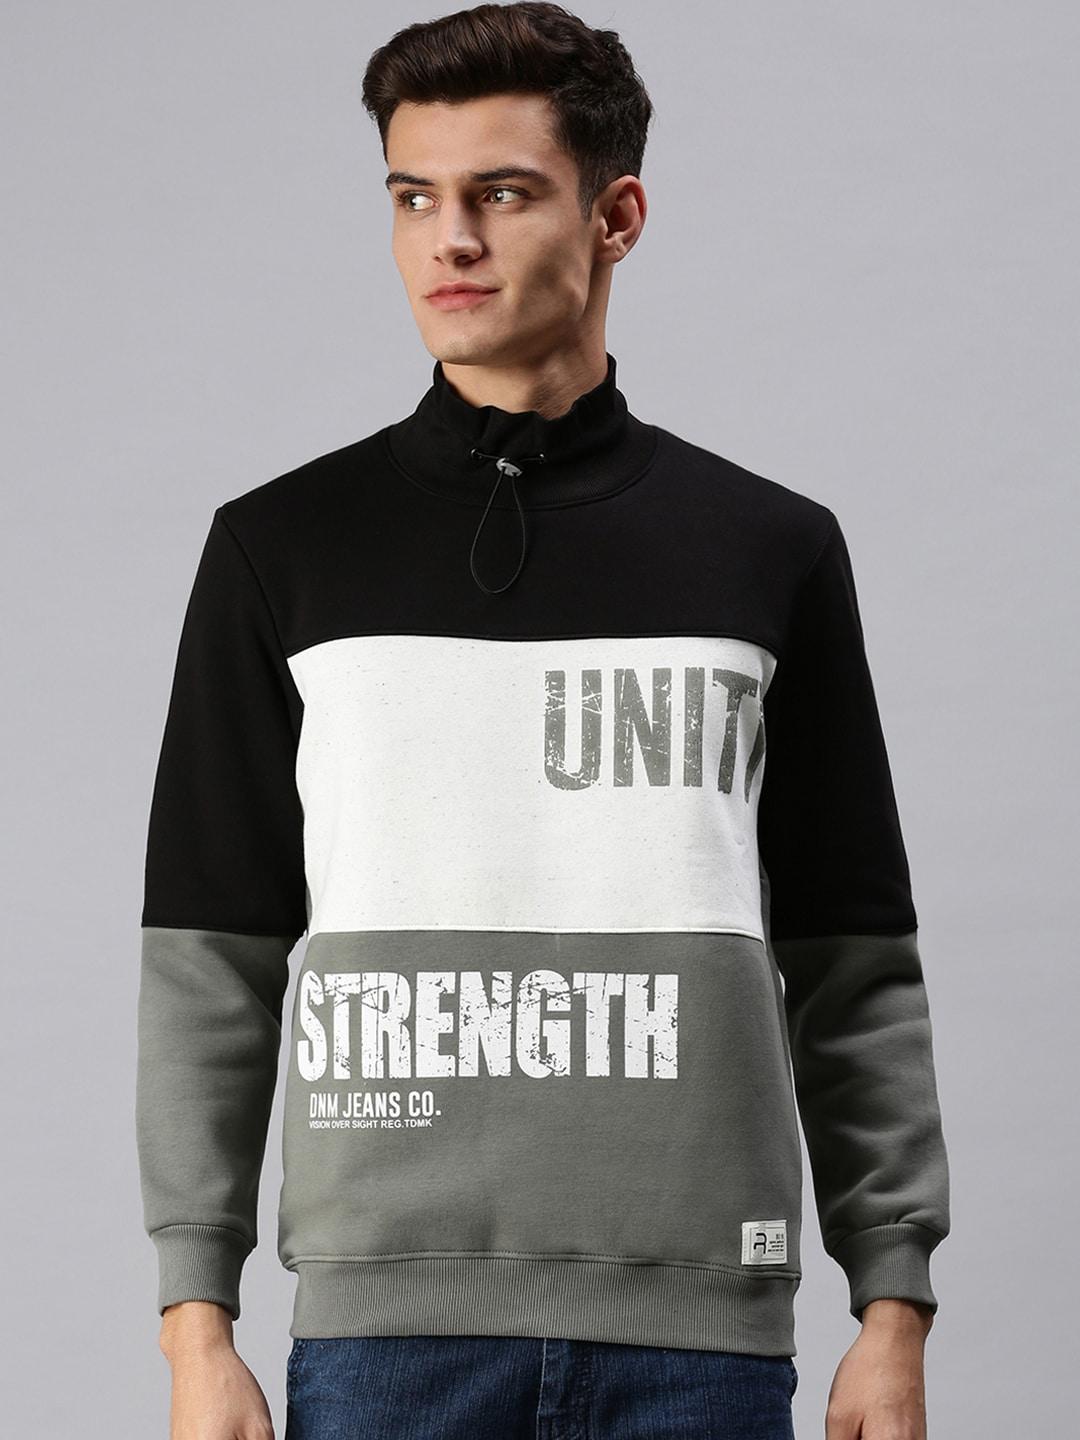 showoff-men-grey-printed-sweatshirt